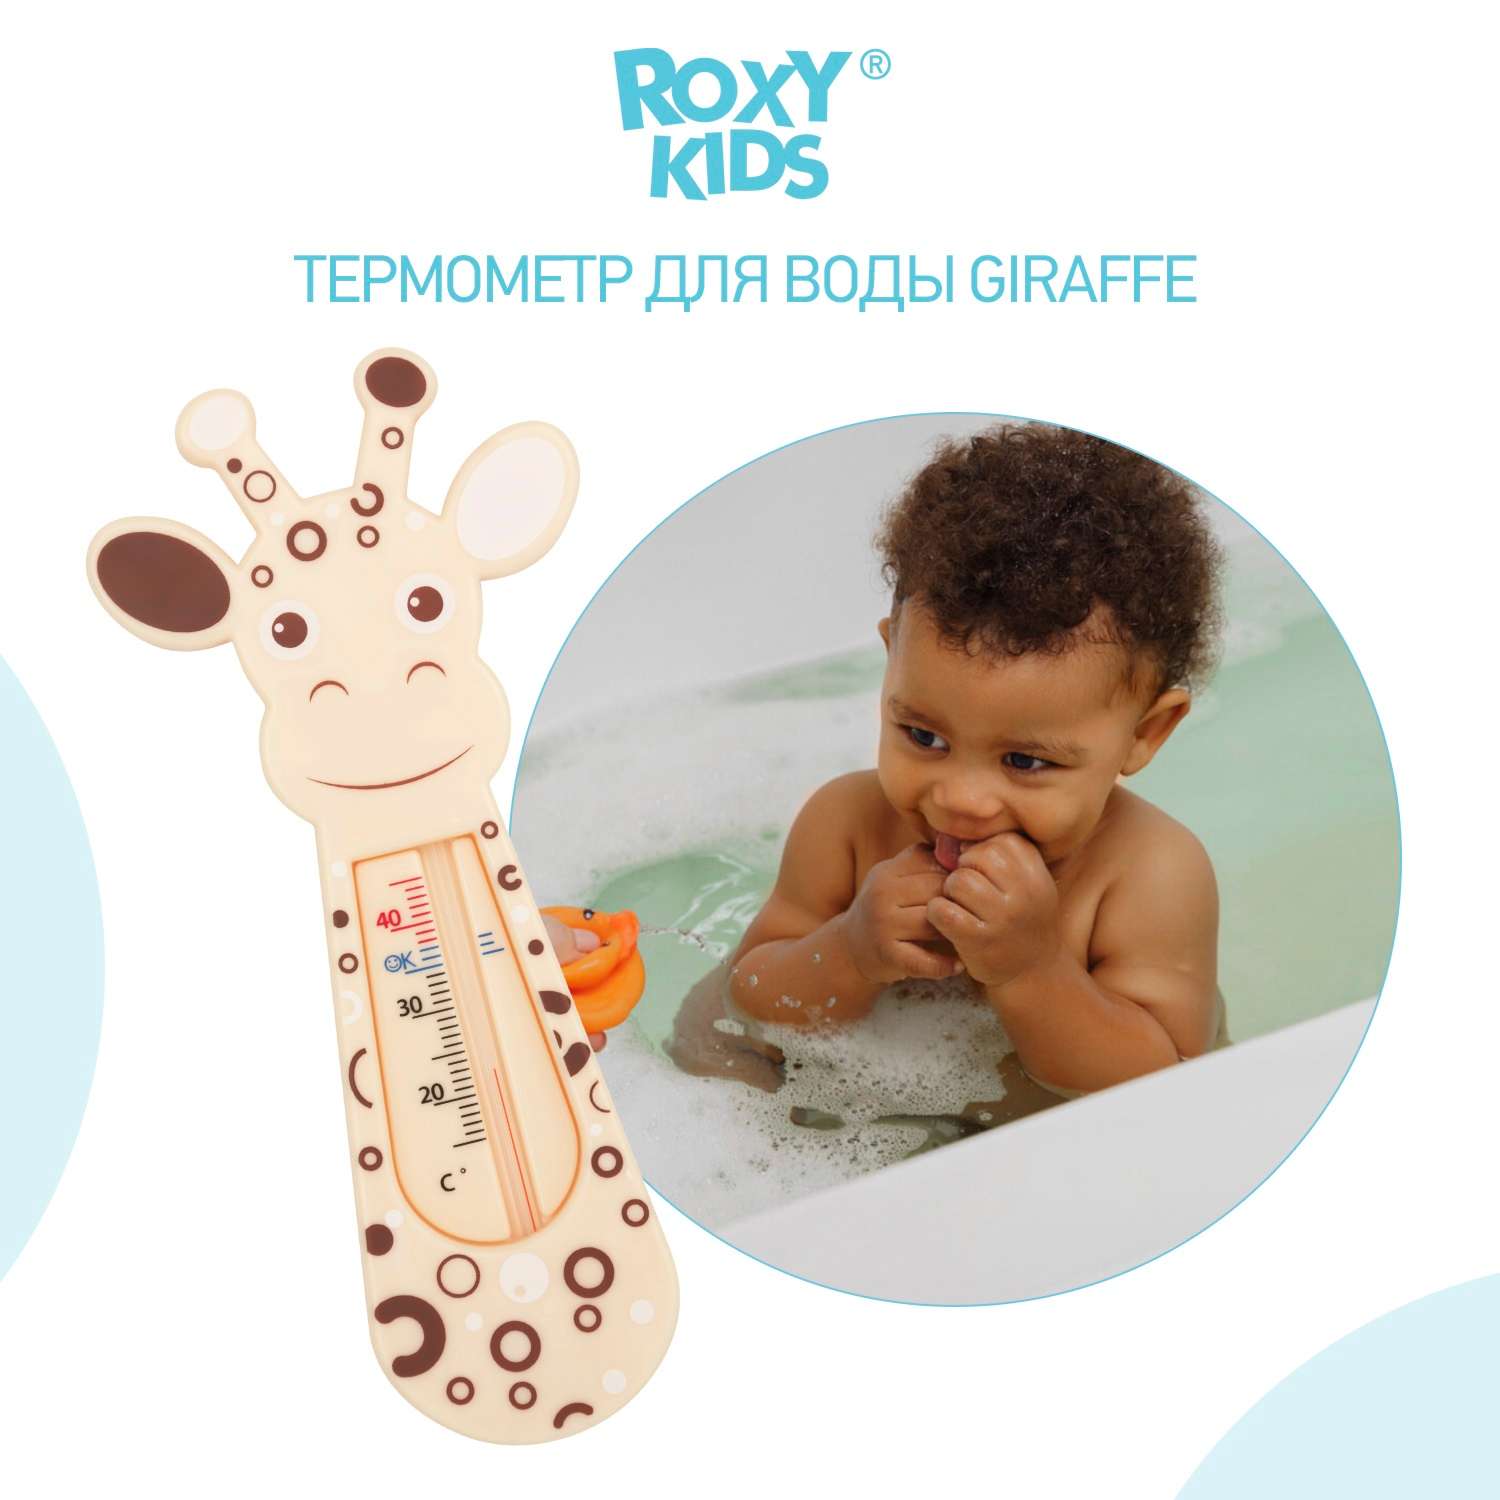 Термометр детский ROXY-KIDS Giraffe для купания в ванночке - фото 1